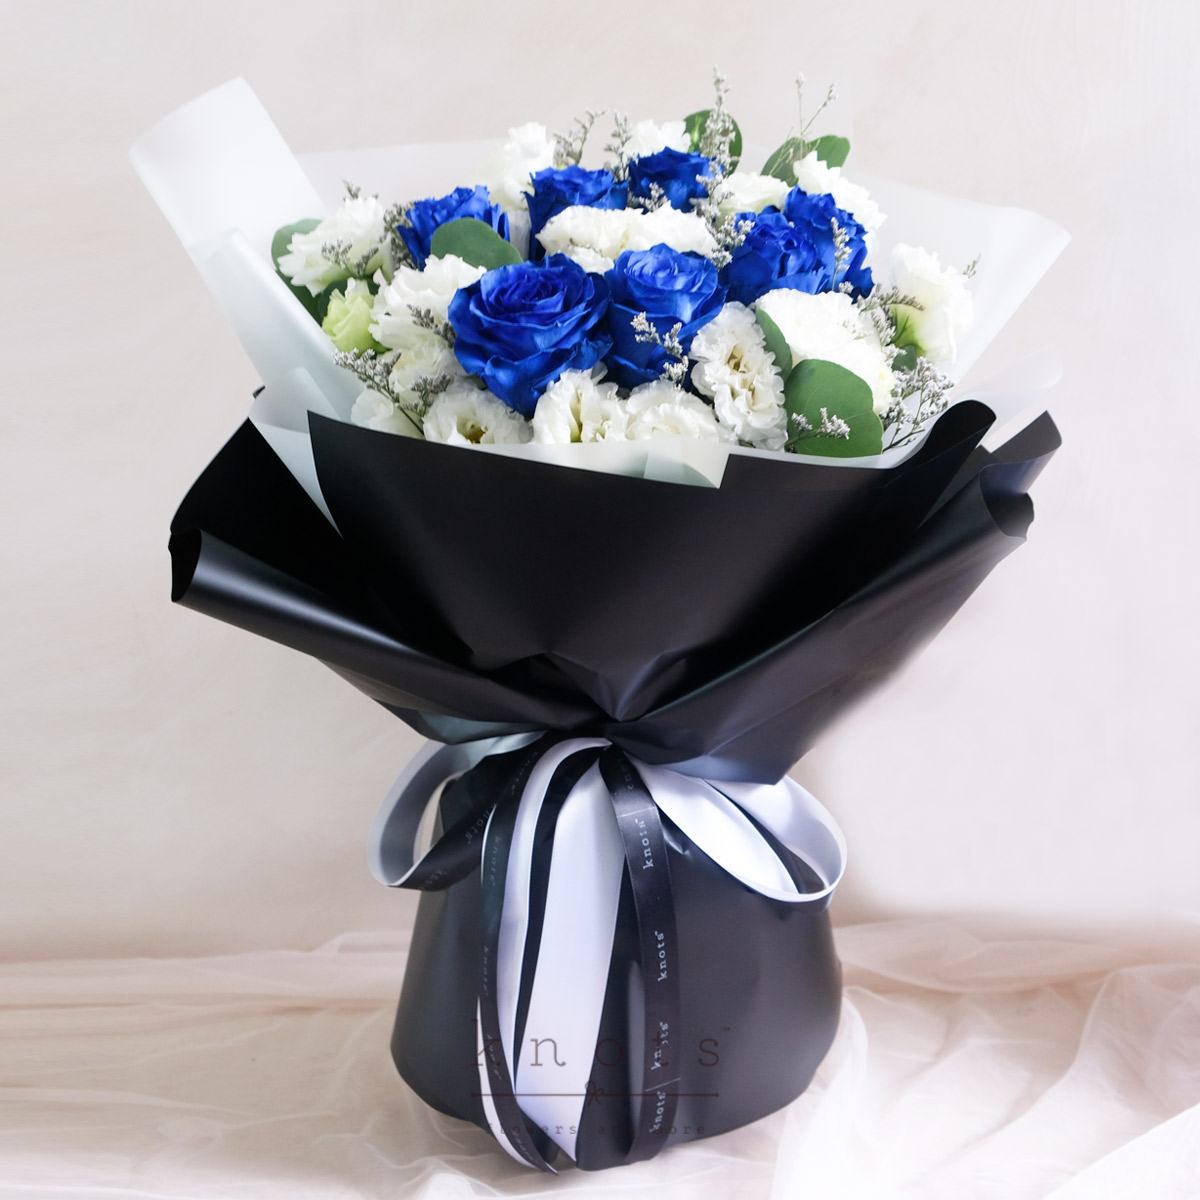 Waiting For Us (Blue Ecuadorian Roses Bouquet)